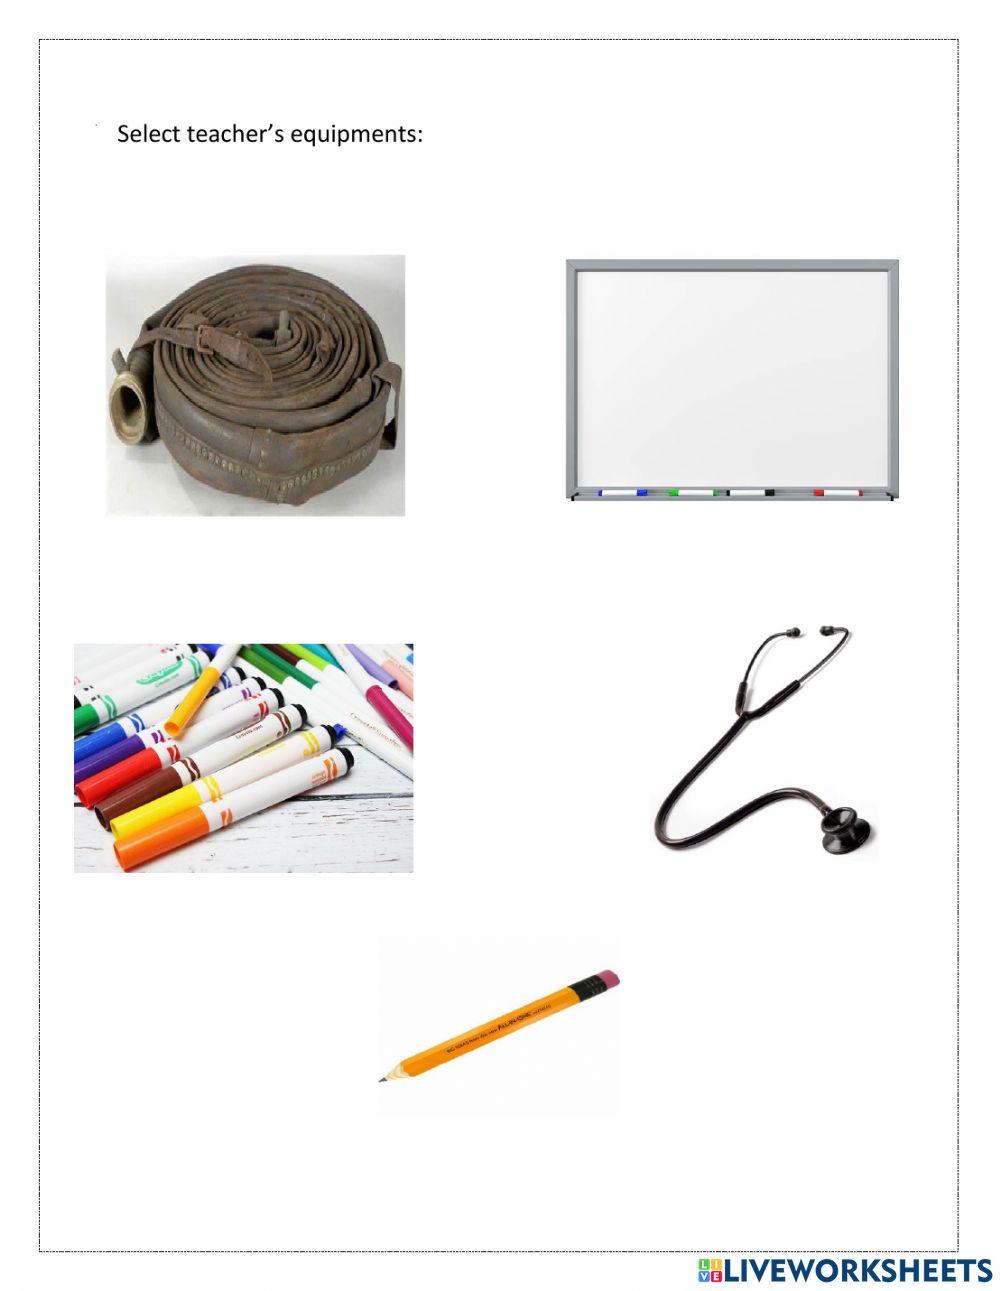 Select teacher's equipments